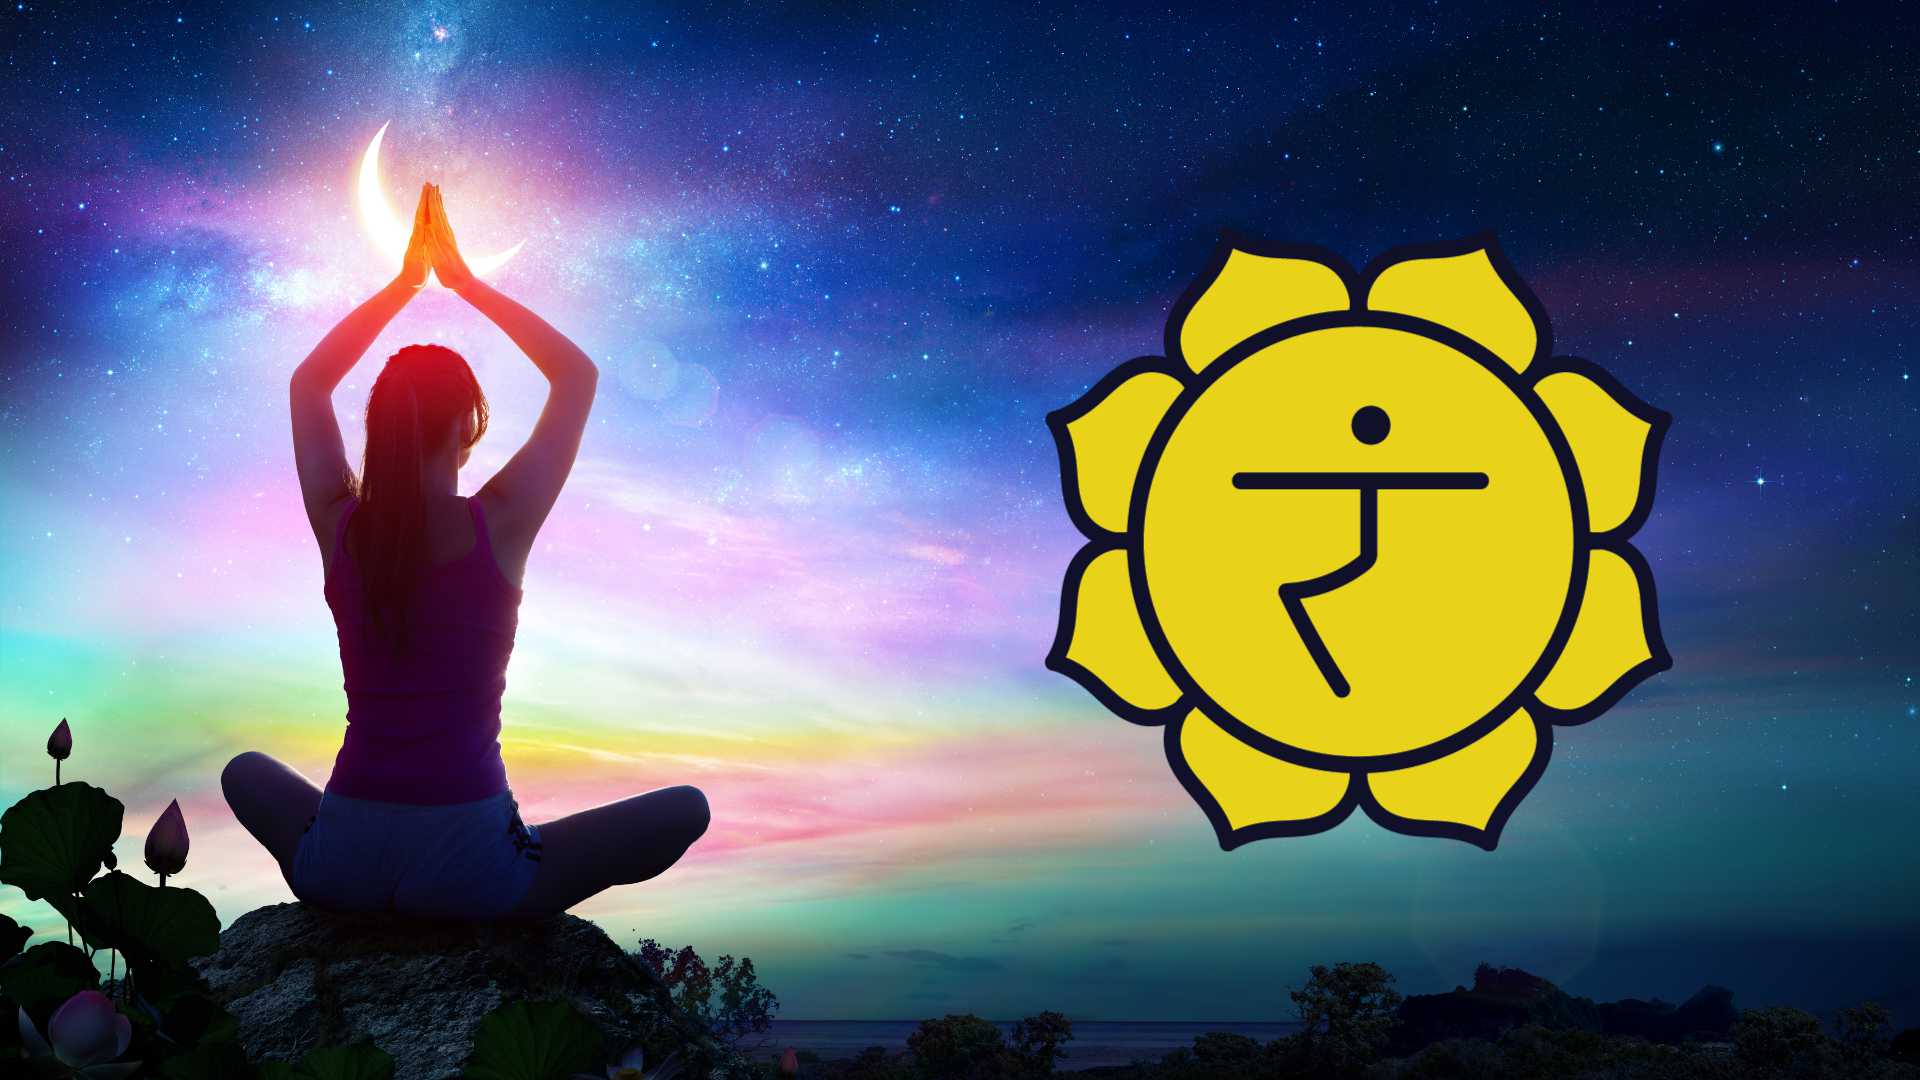 Balance Your Heart Chakra with these Yoga Poses #MondayMotivation